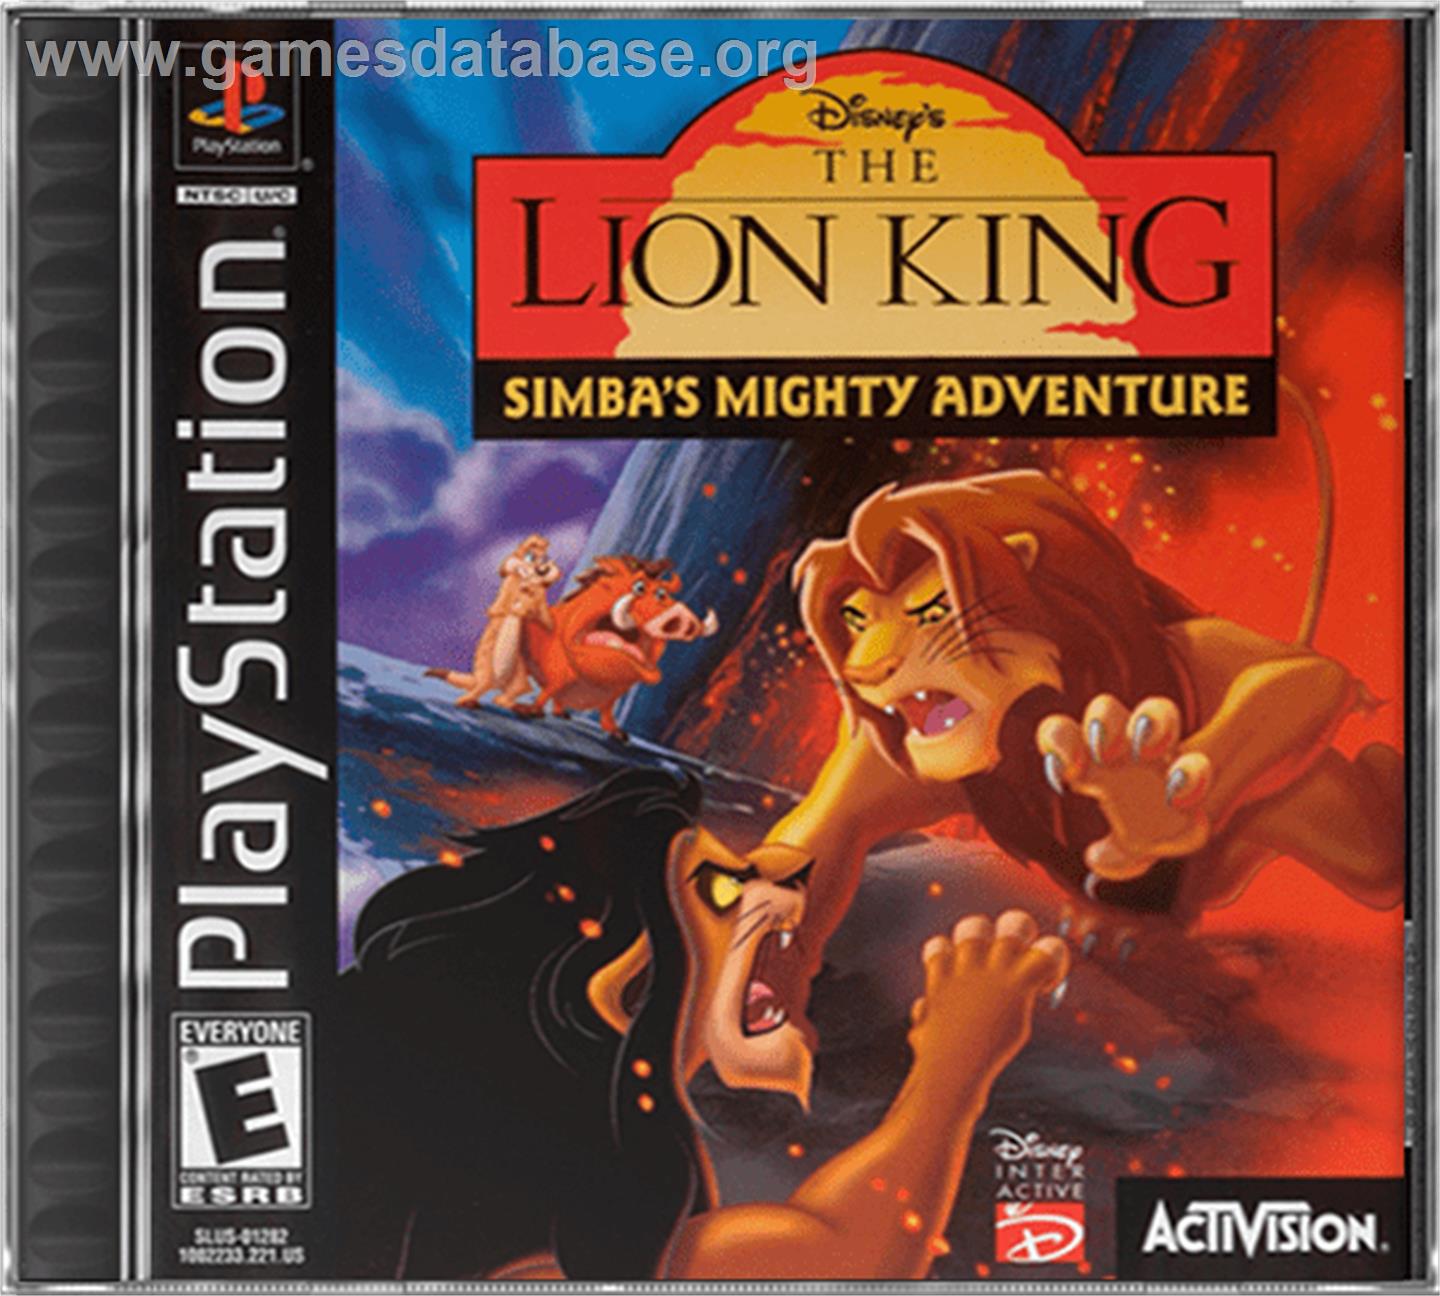 Disney's the Lion King: Simba's Mighty Adventure - Sony Playstation - Artwork - Box